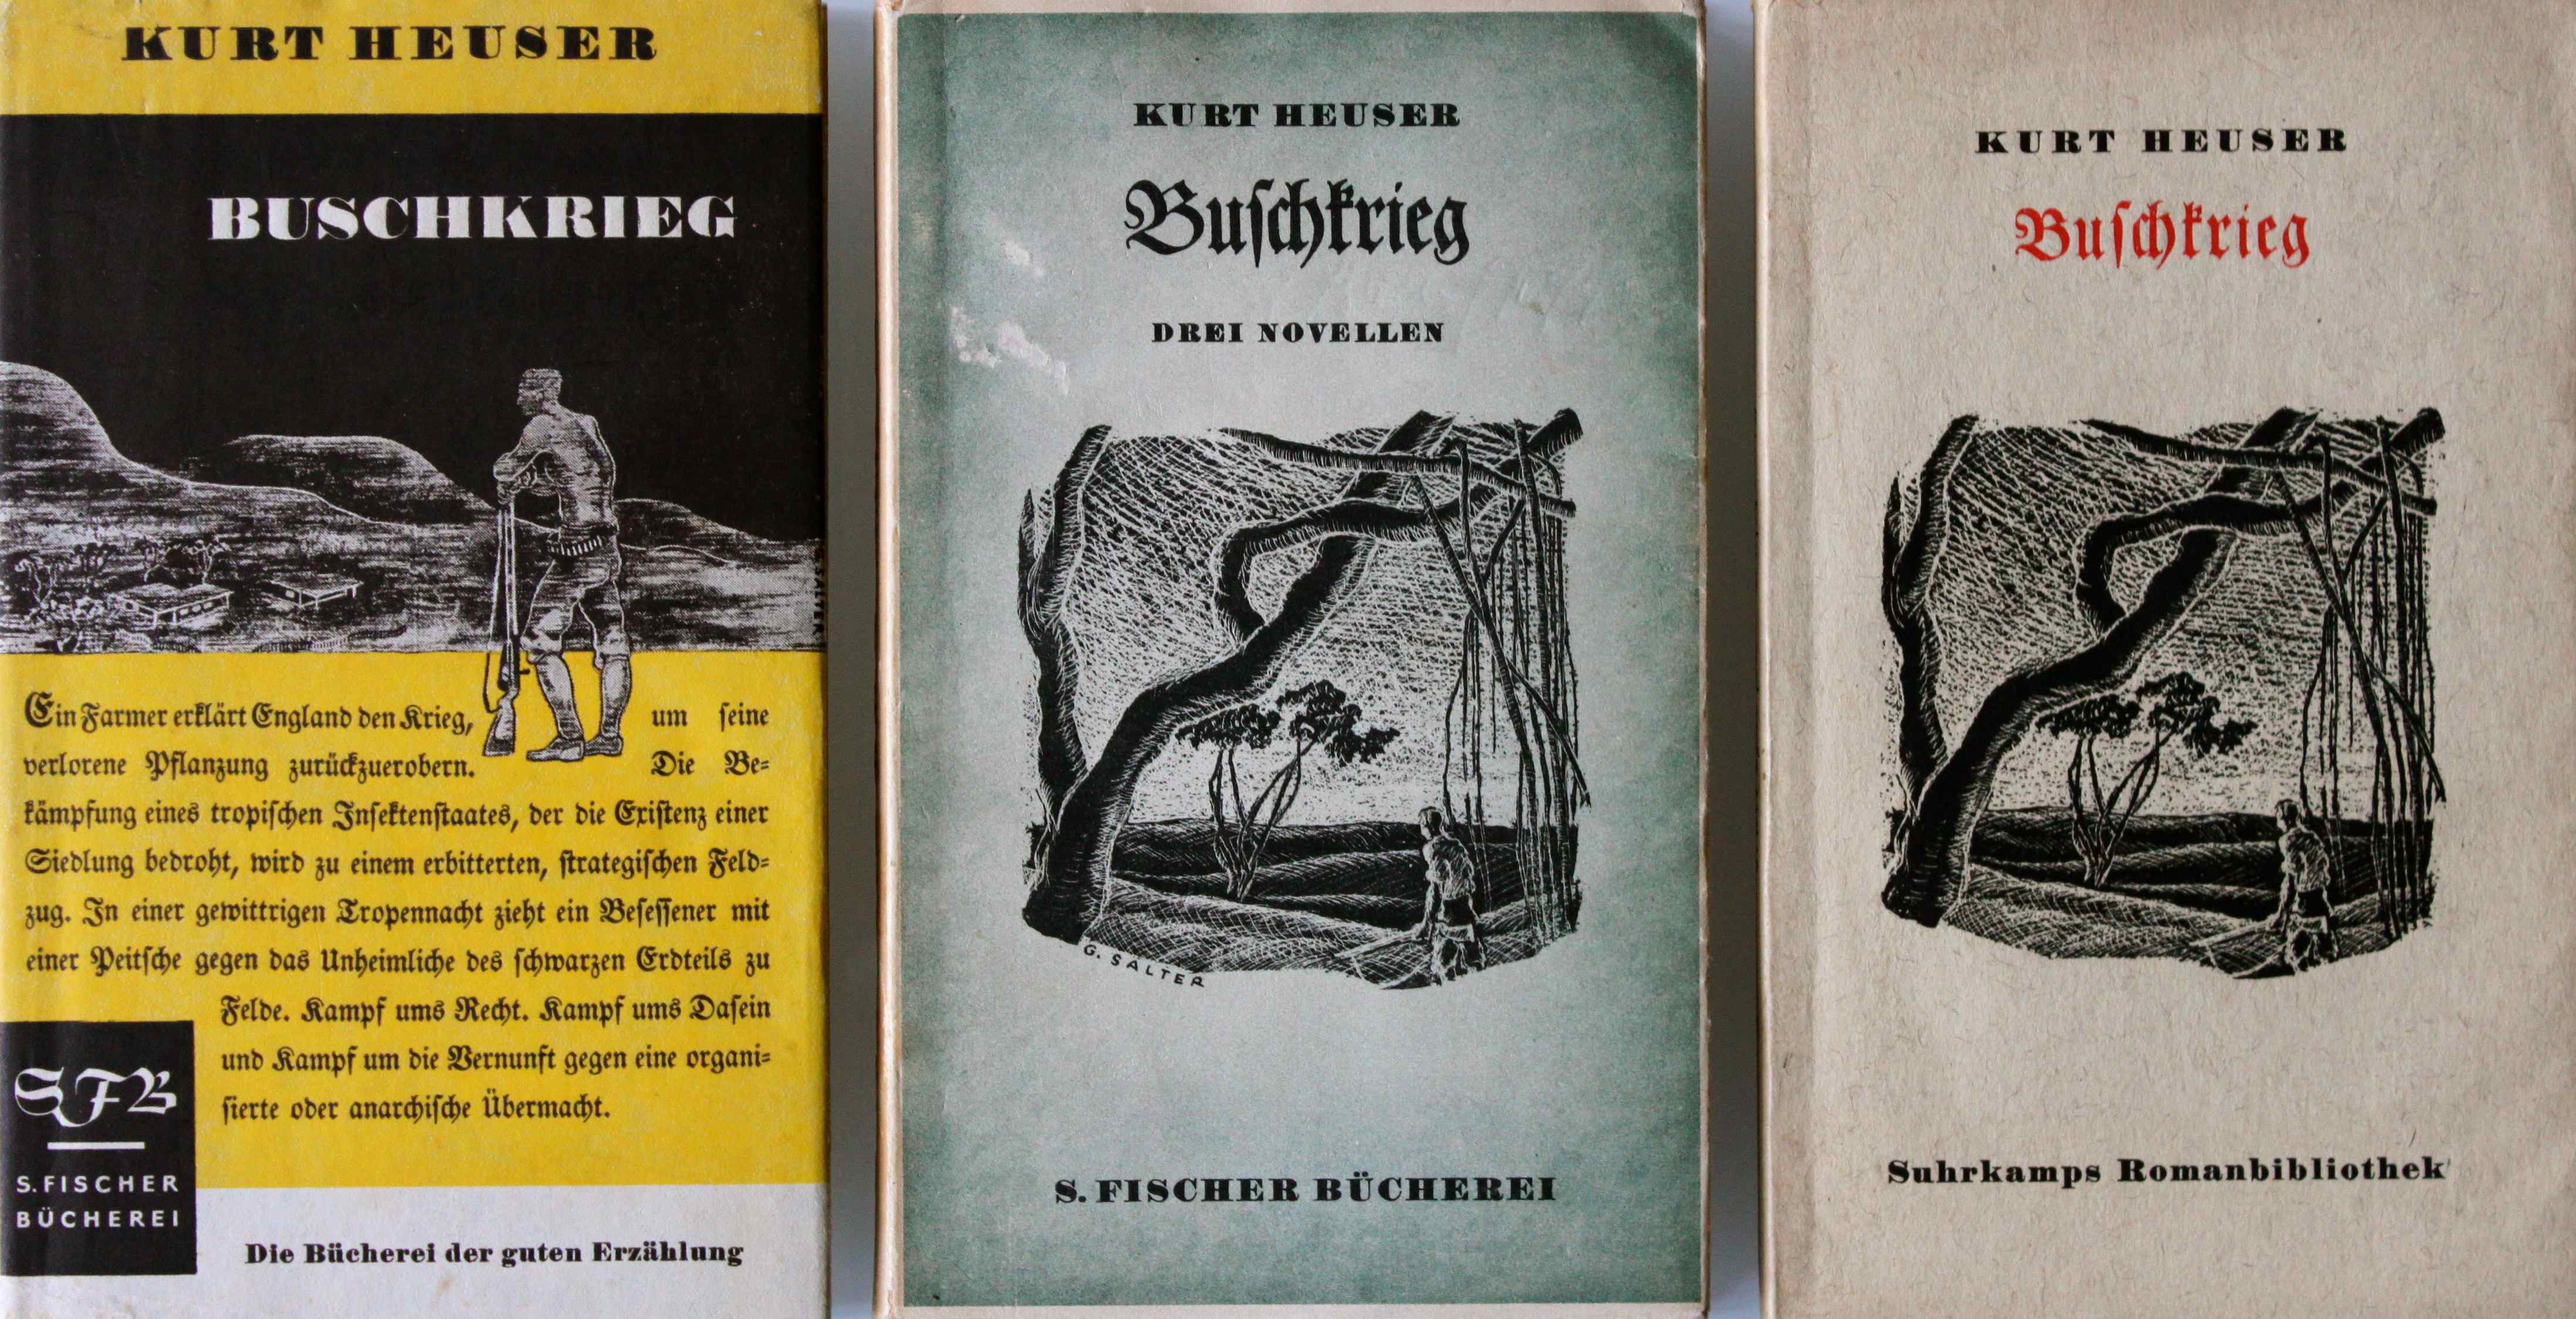 Kurt Heuser, Buschkrieg, 1.-7. Aufl. 1933 in zwei Varianten u. 8.-17. Aufl. 1943